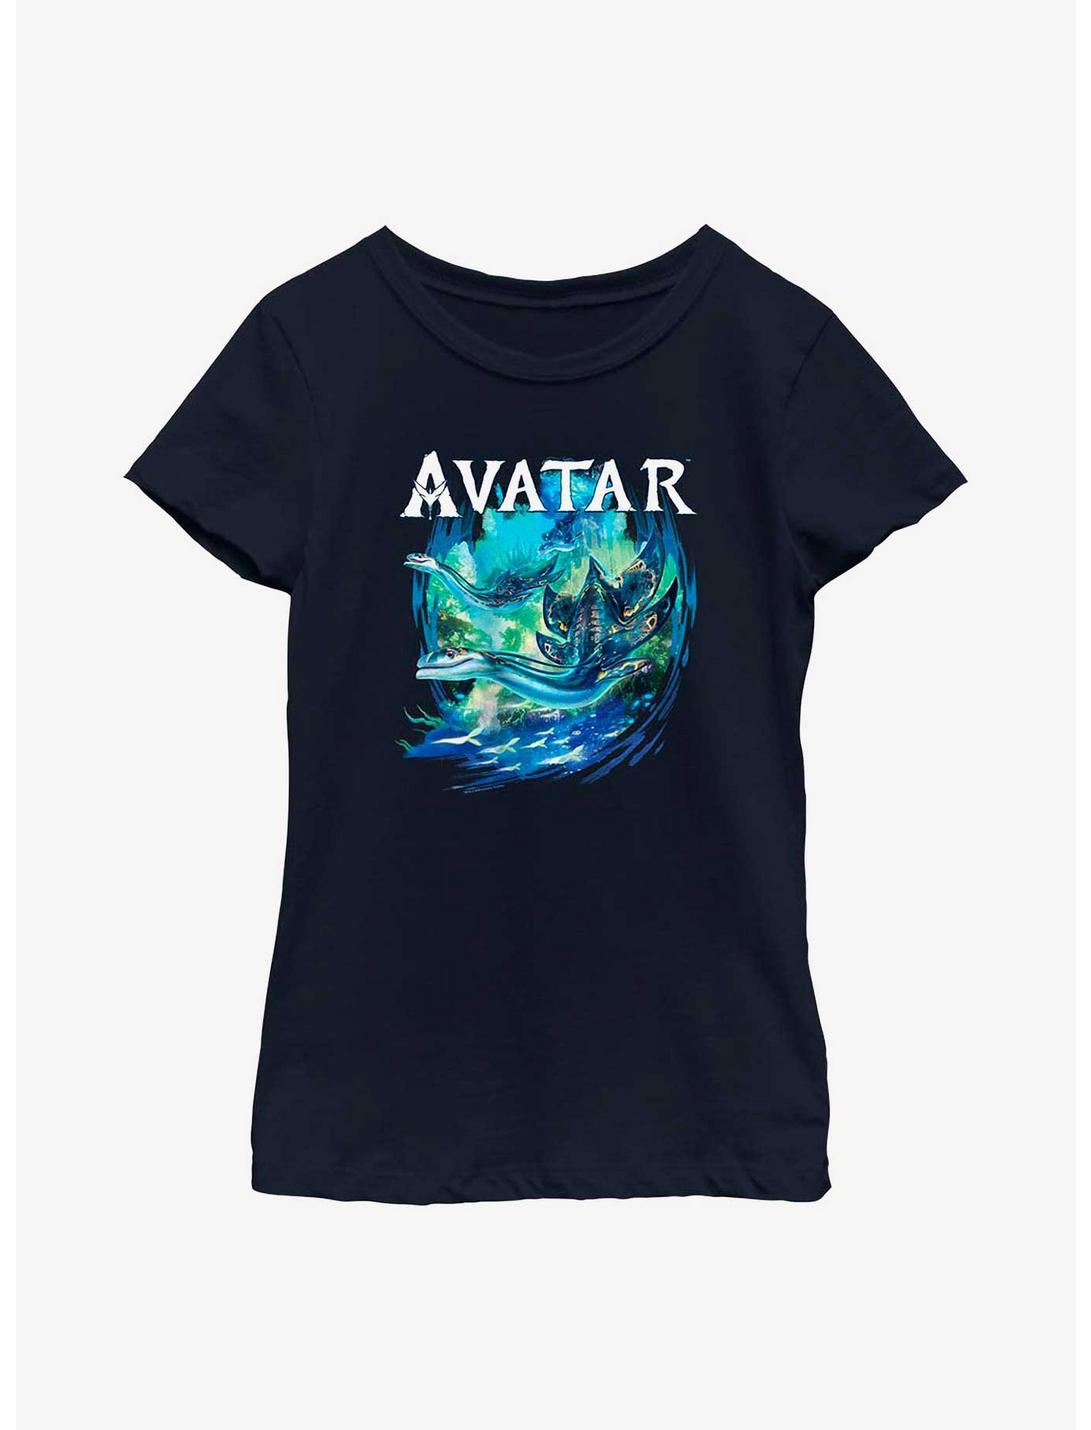 Avatar: The Way Of The Water Explore Pandora Youth Girls T-Shirt, NAVY, hi-res